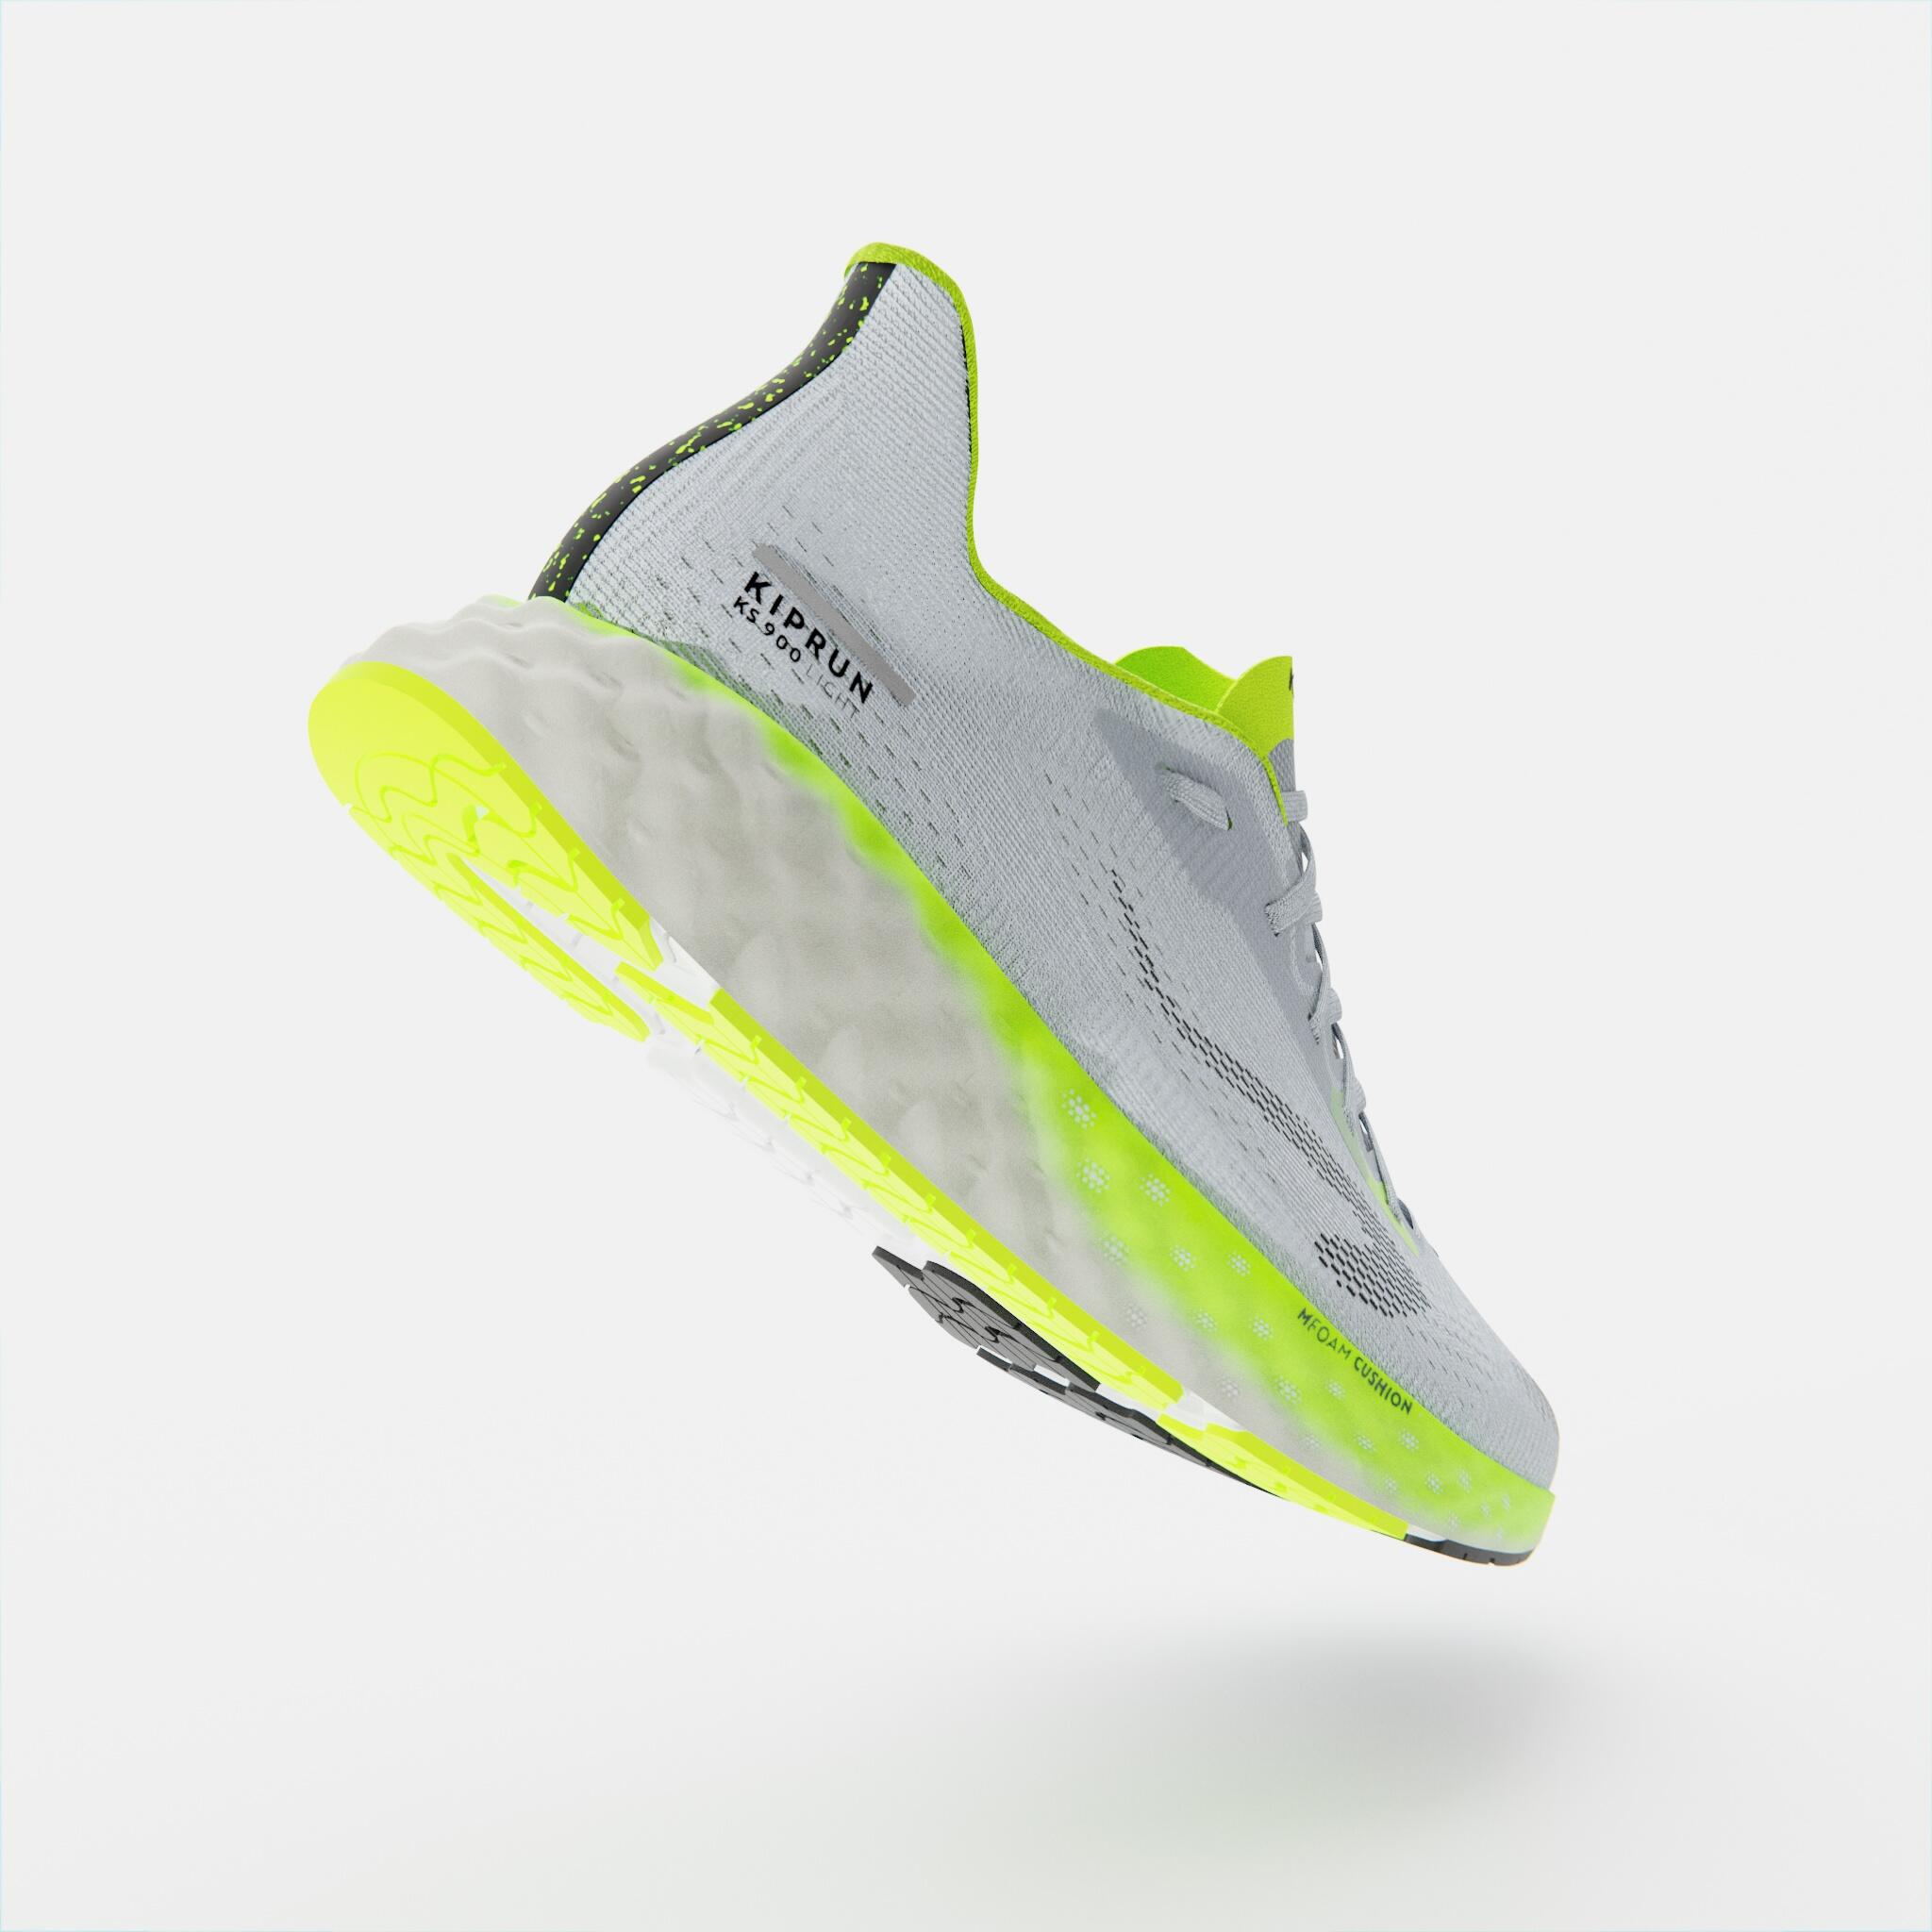 Men's KIPRUN KS900 Light running shoes - Grey/Yellow 9/12